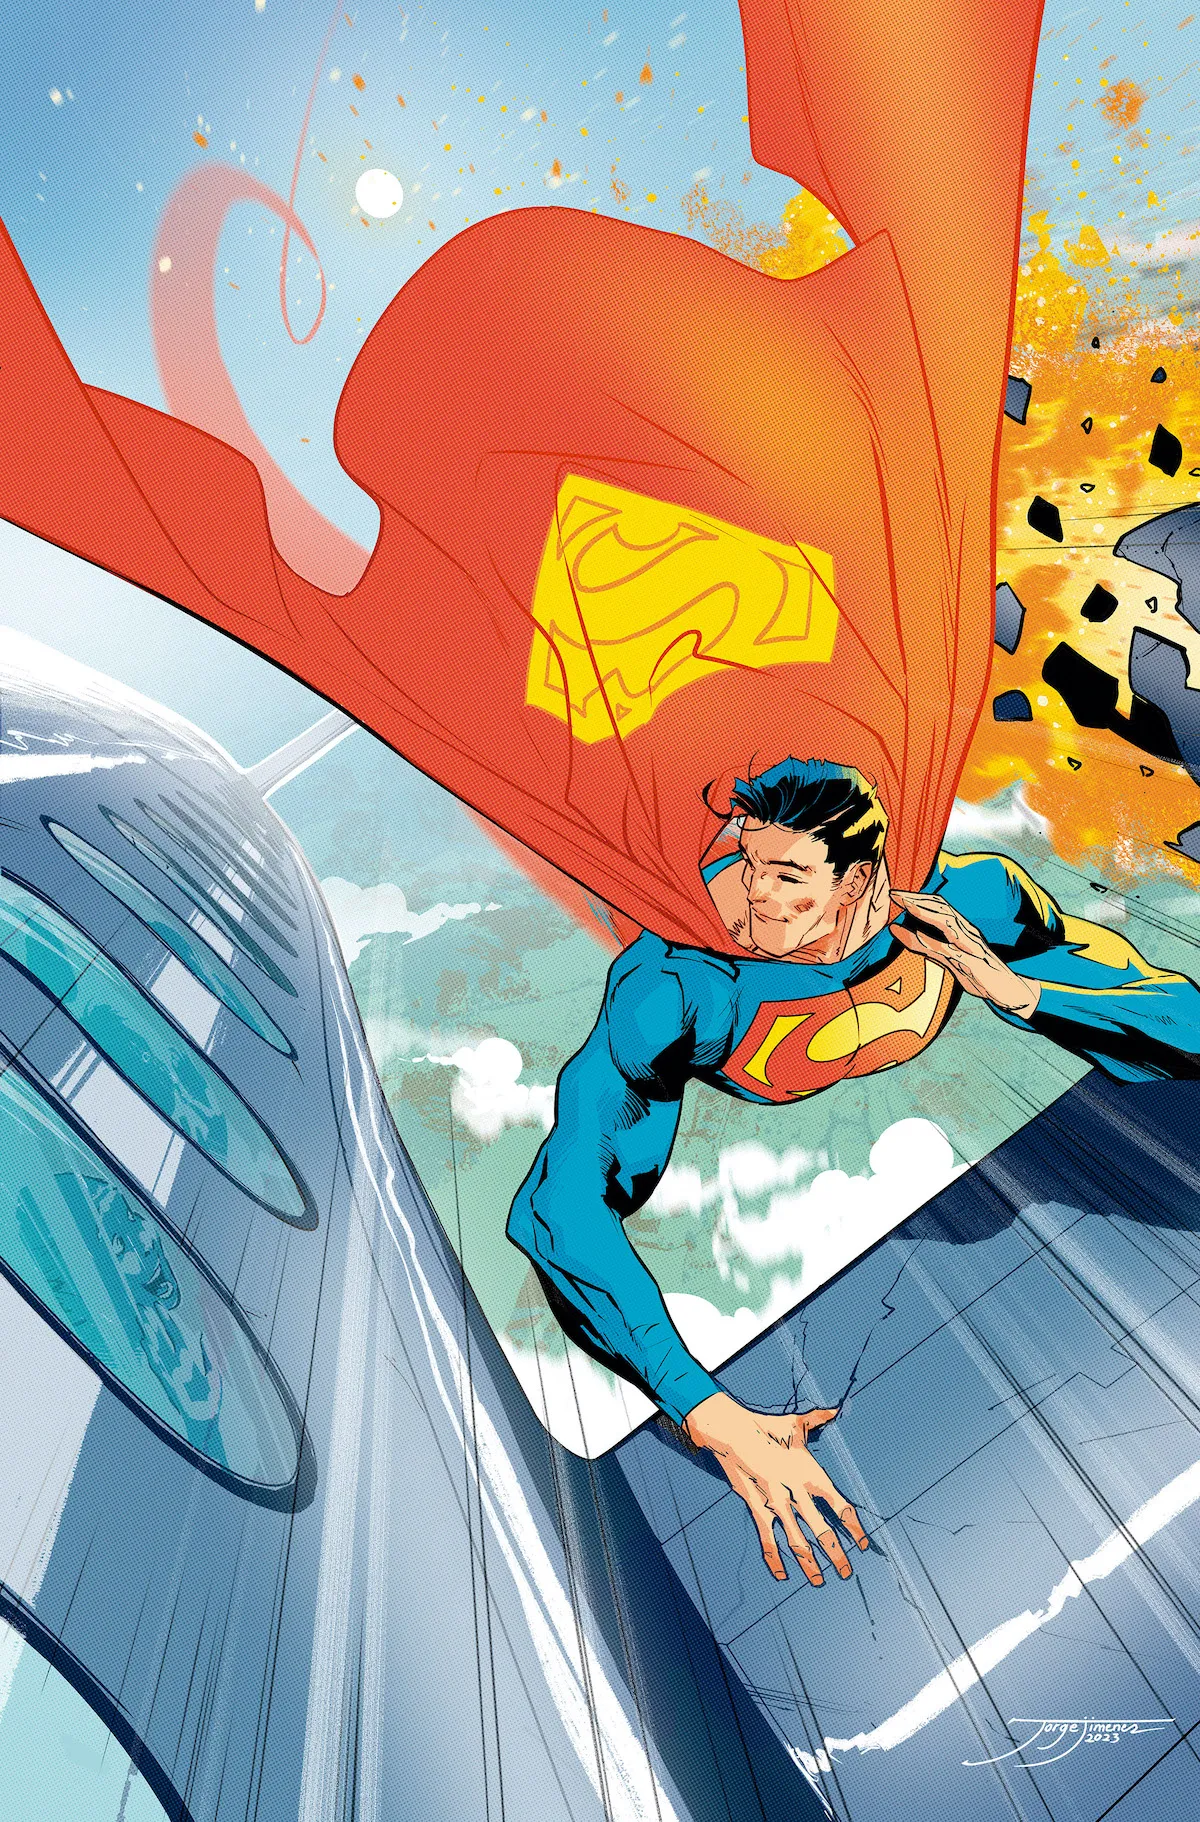 Action Comics #1059 spoilers C Superman